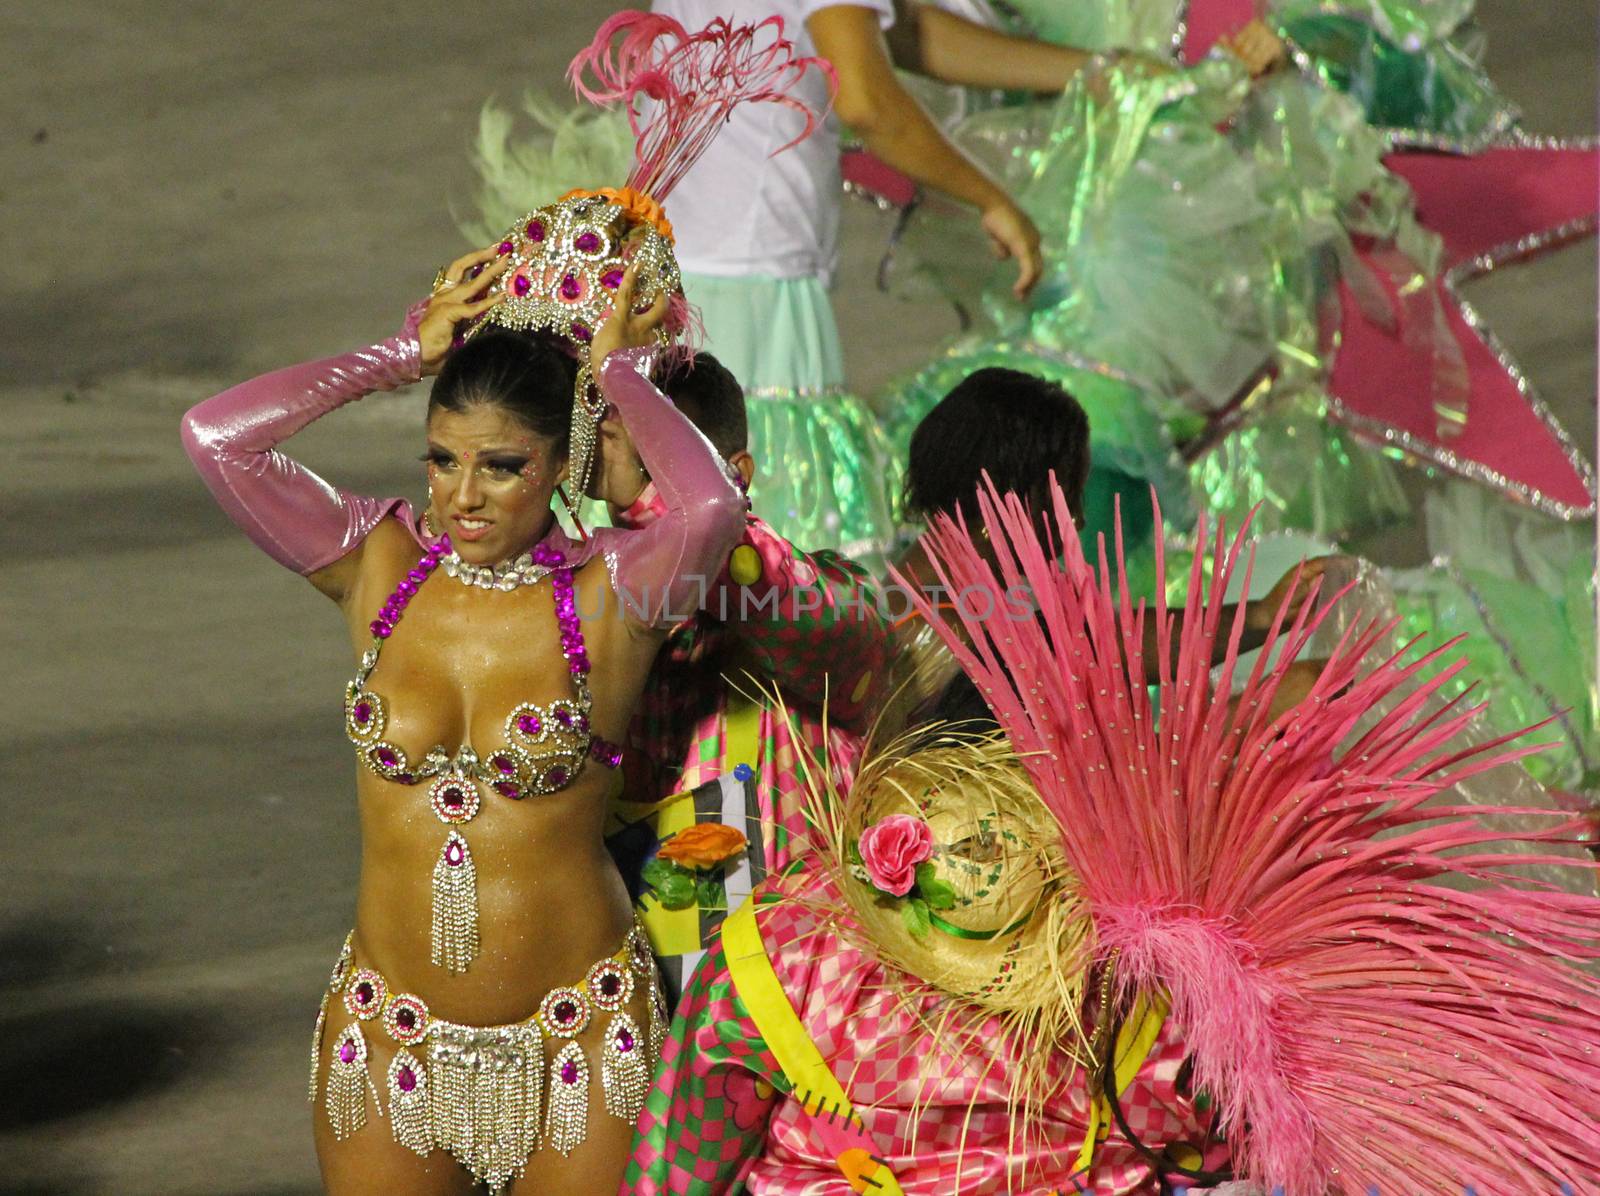 An entertainer at a carnaval in Rio de Janeiro, Brazil
03 Mar 2014
No model release
Editorial only